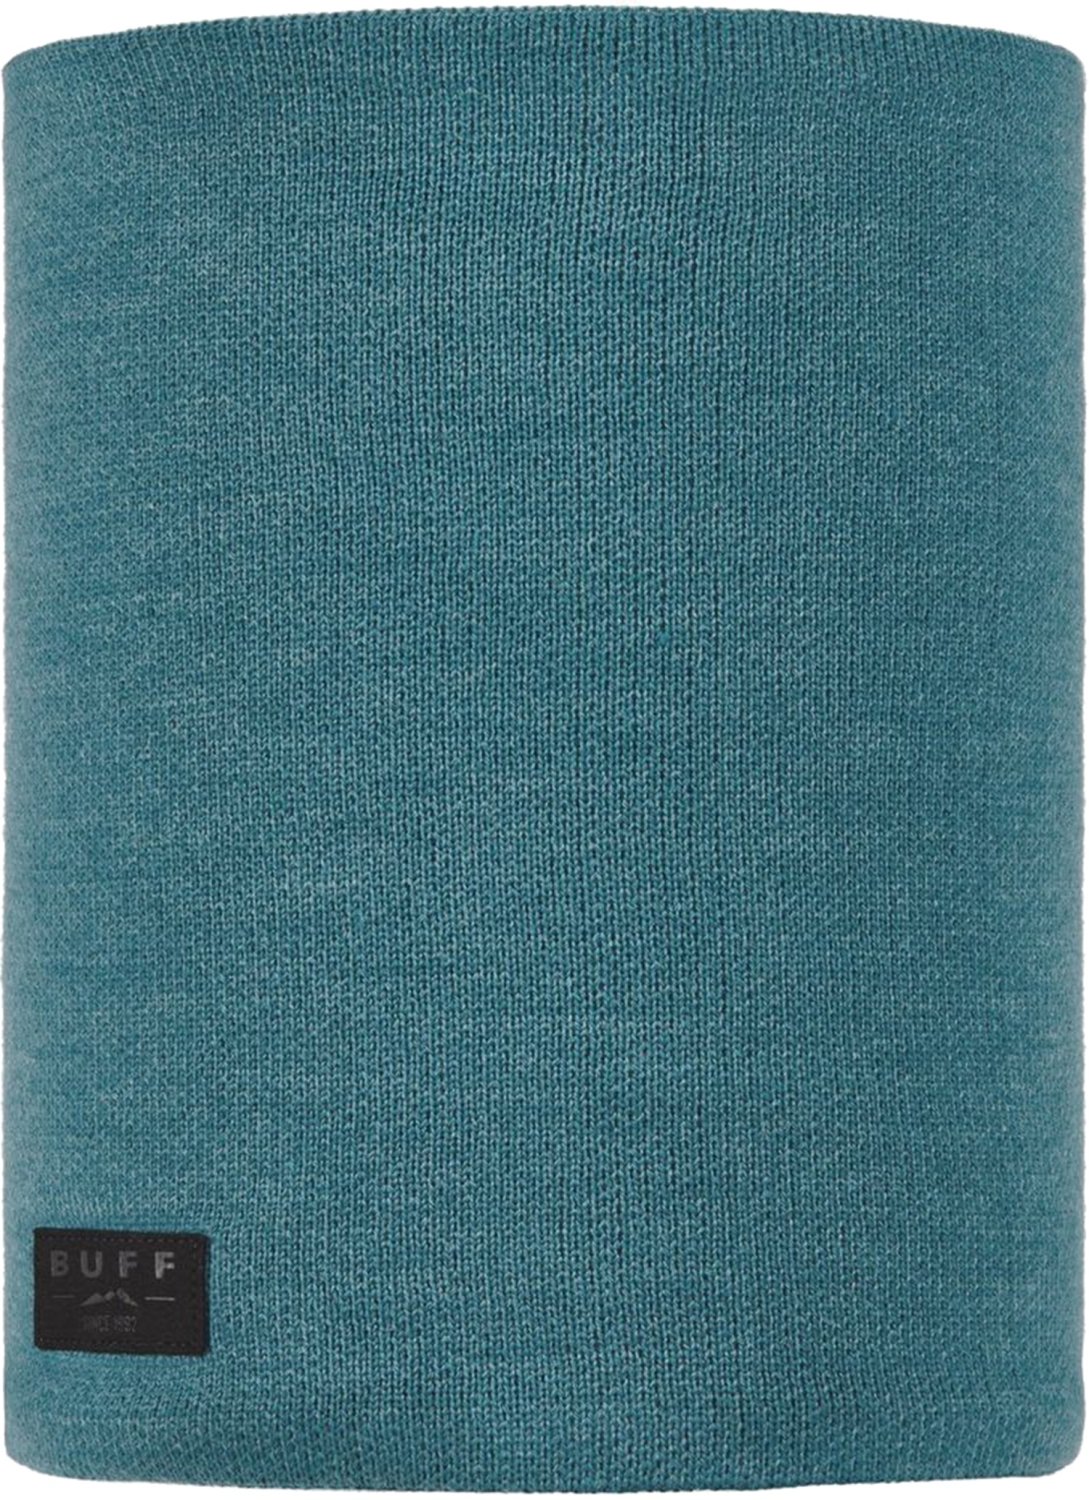 Шарф Buff Knitted & Fleece Neckwarmer Vaed Dusty Blue, US:one size, 129620.742.10.00 купить на ЖДБЗ.ру